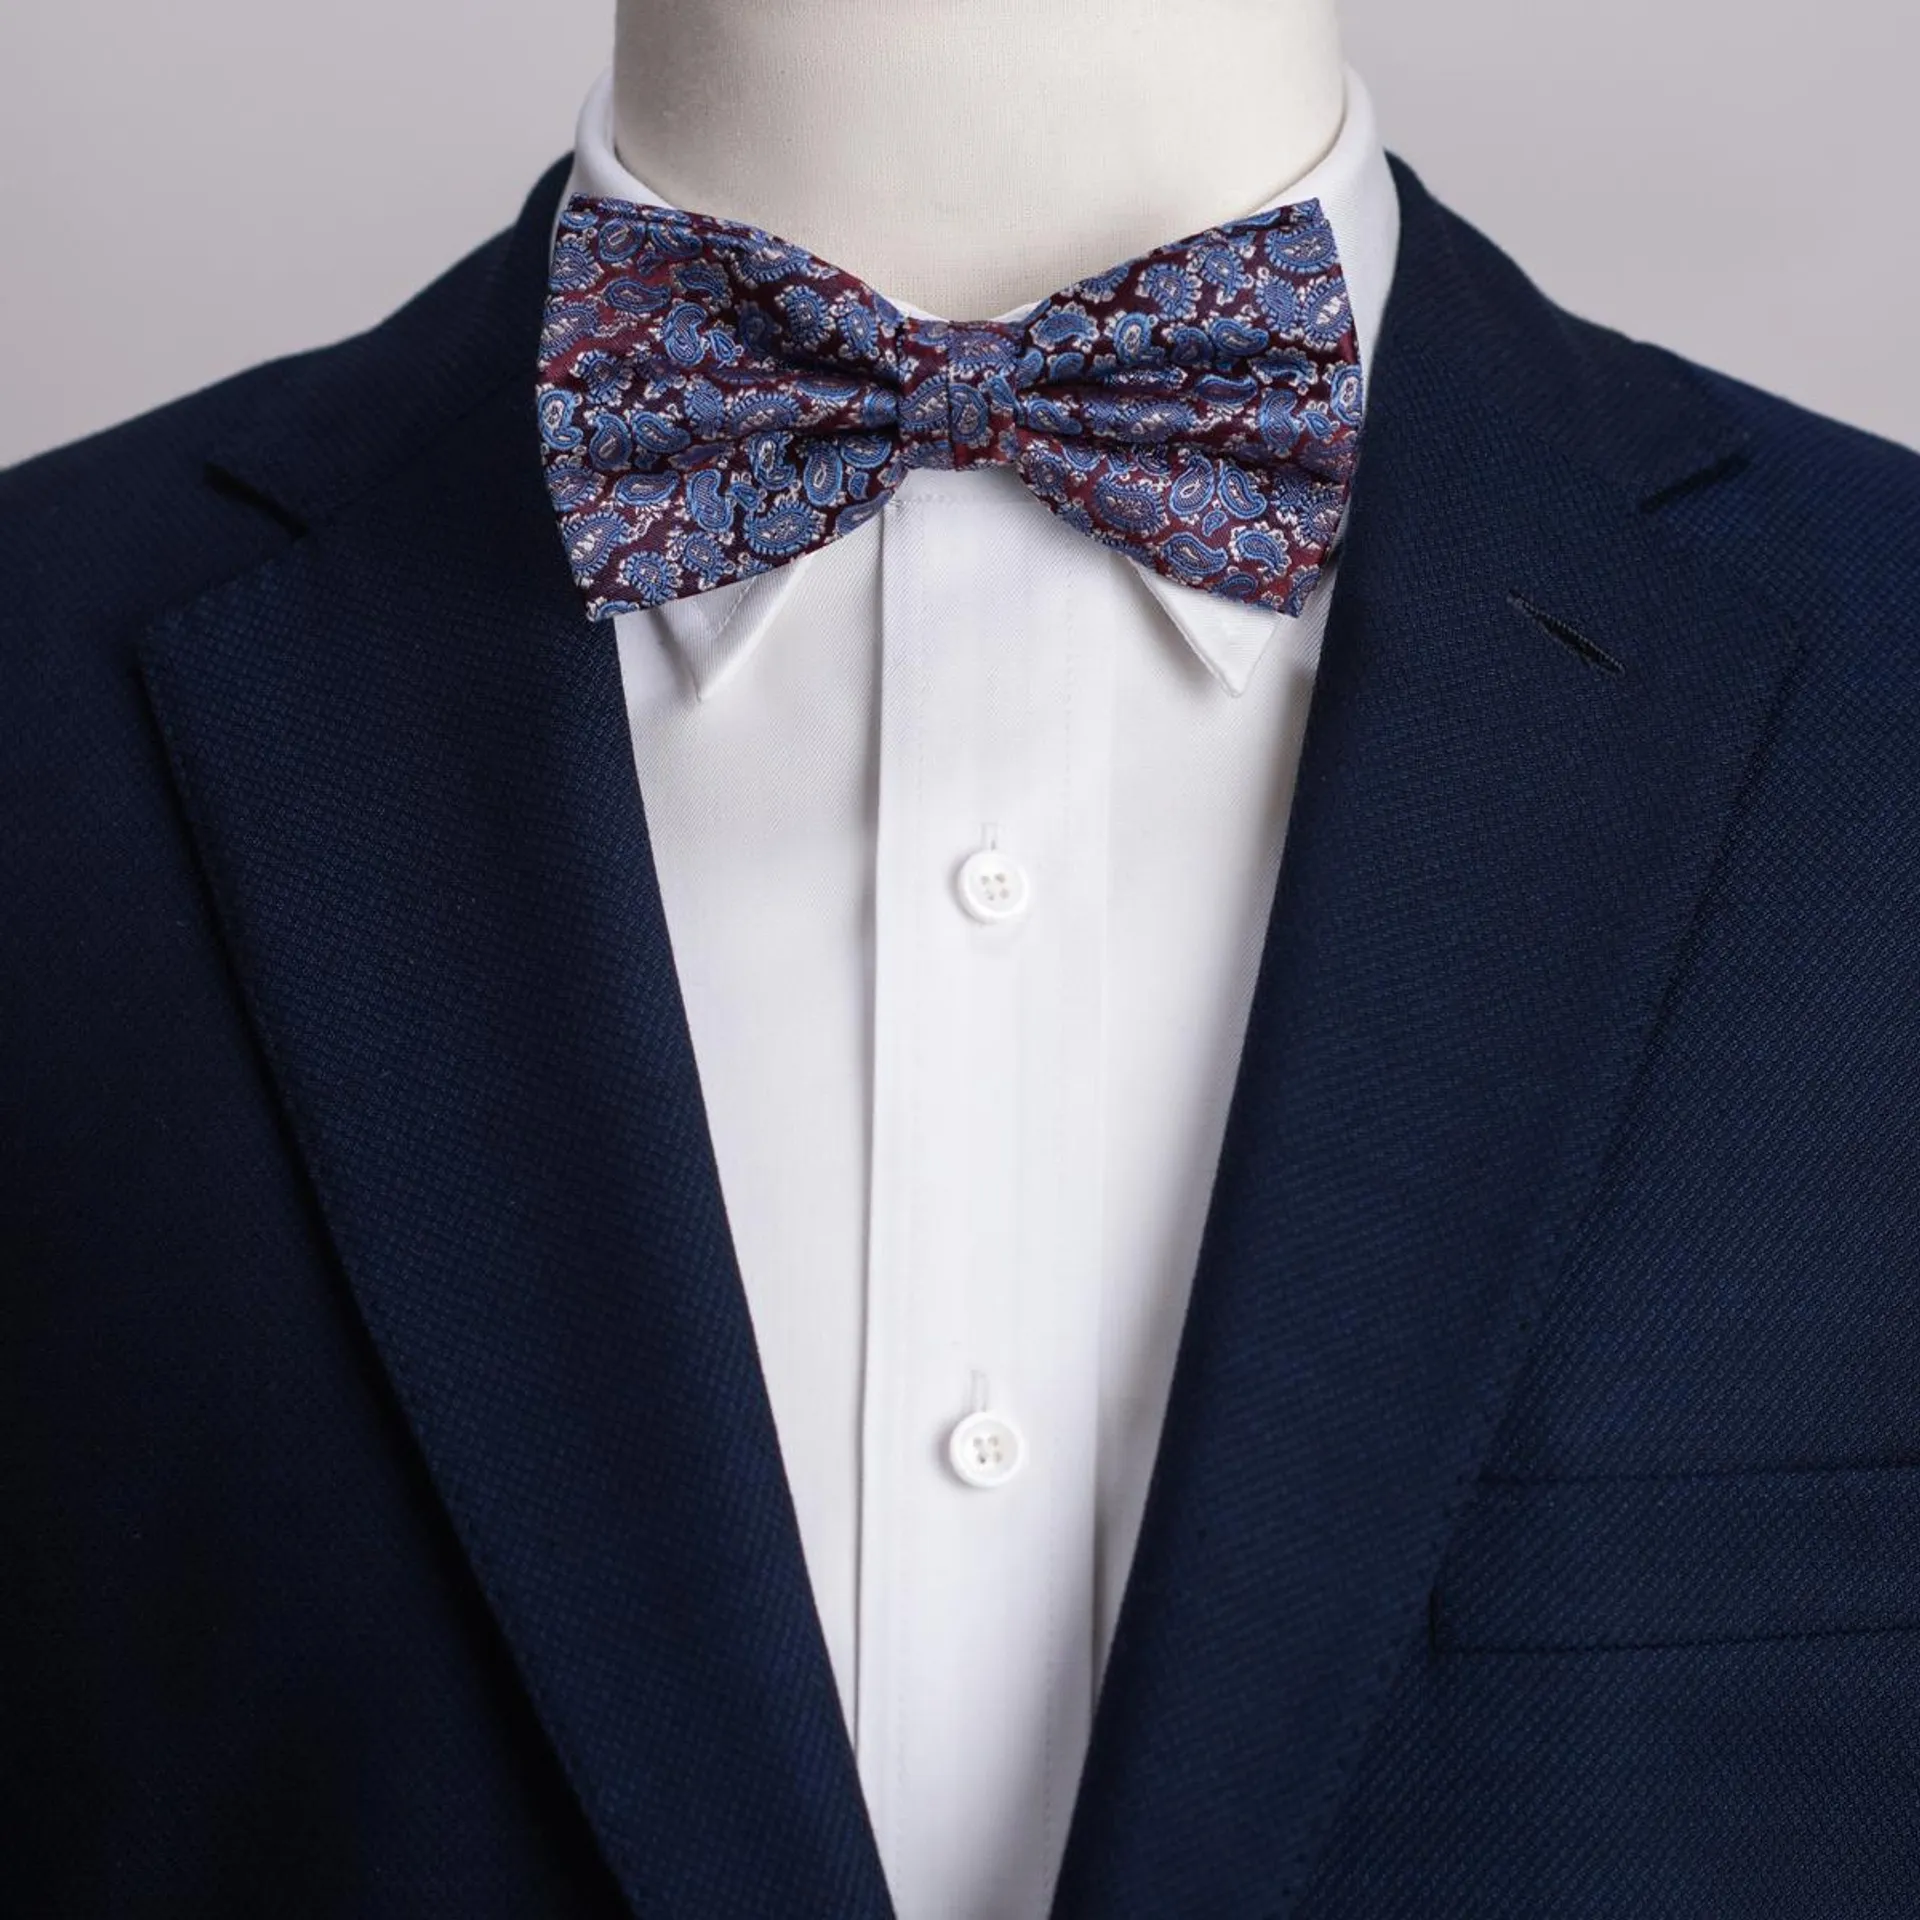 Wine & blue paisley bow tie